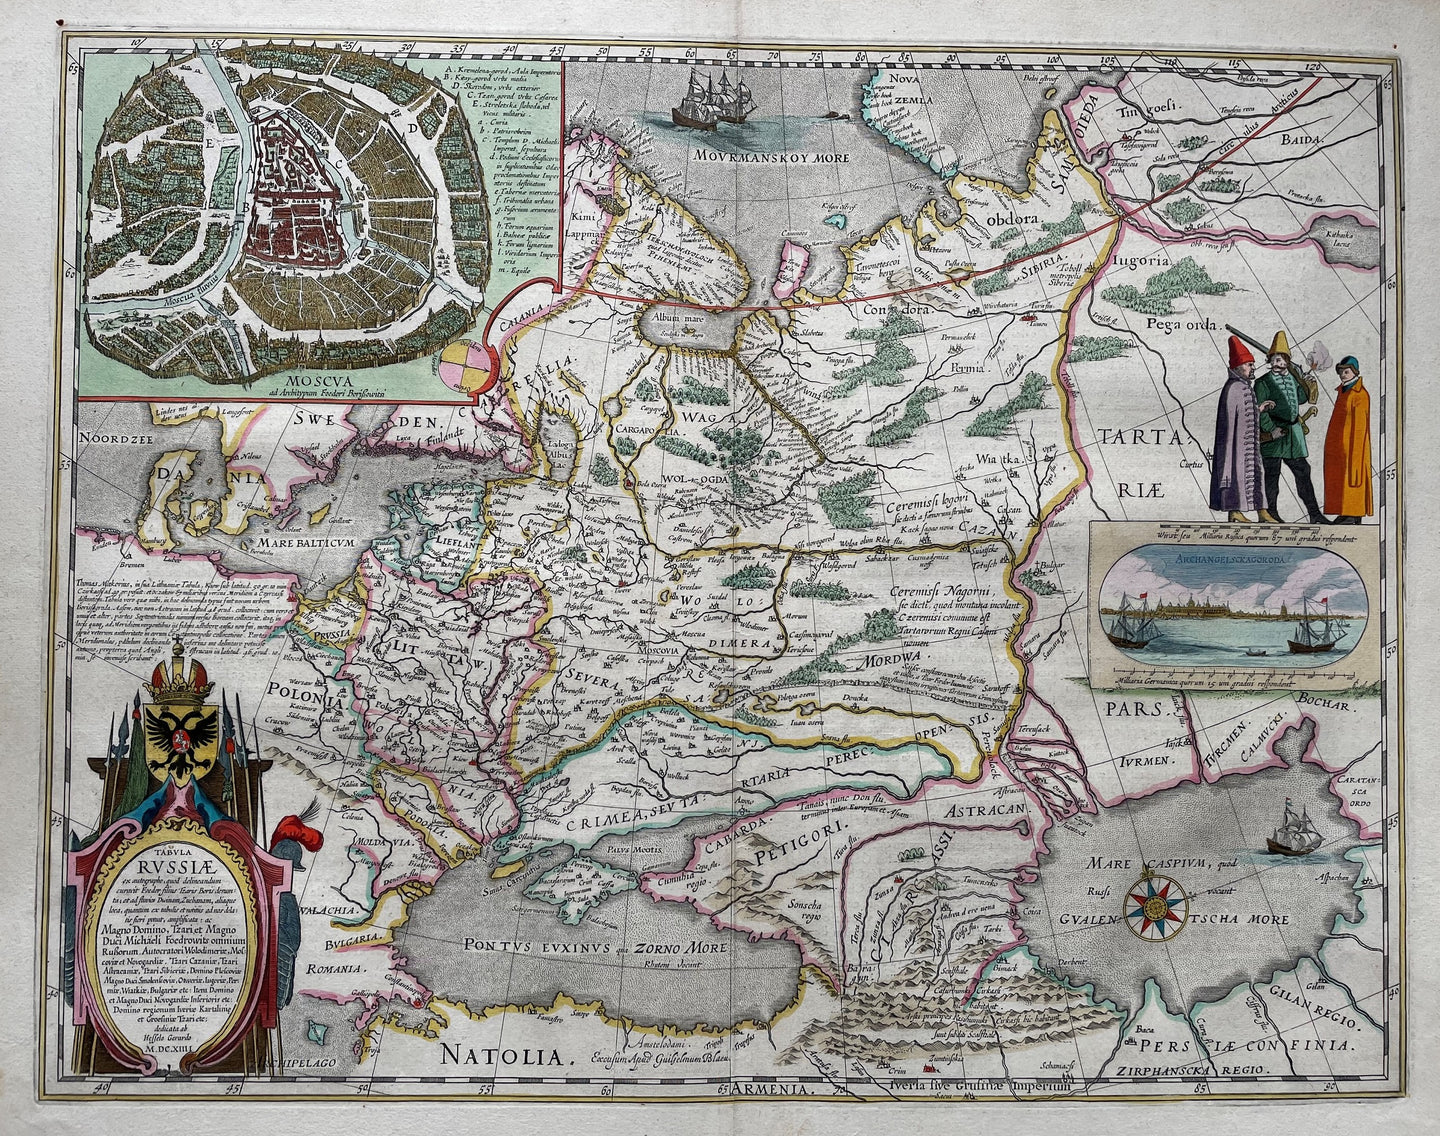 Rusland Russia - Hessel Gerritsz. Willem en Joan Blaeu - circa 1659